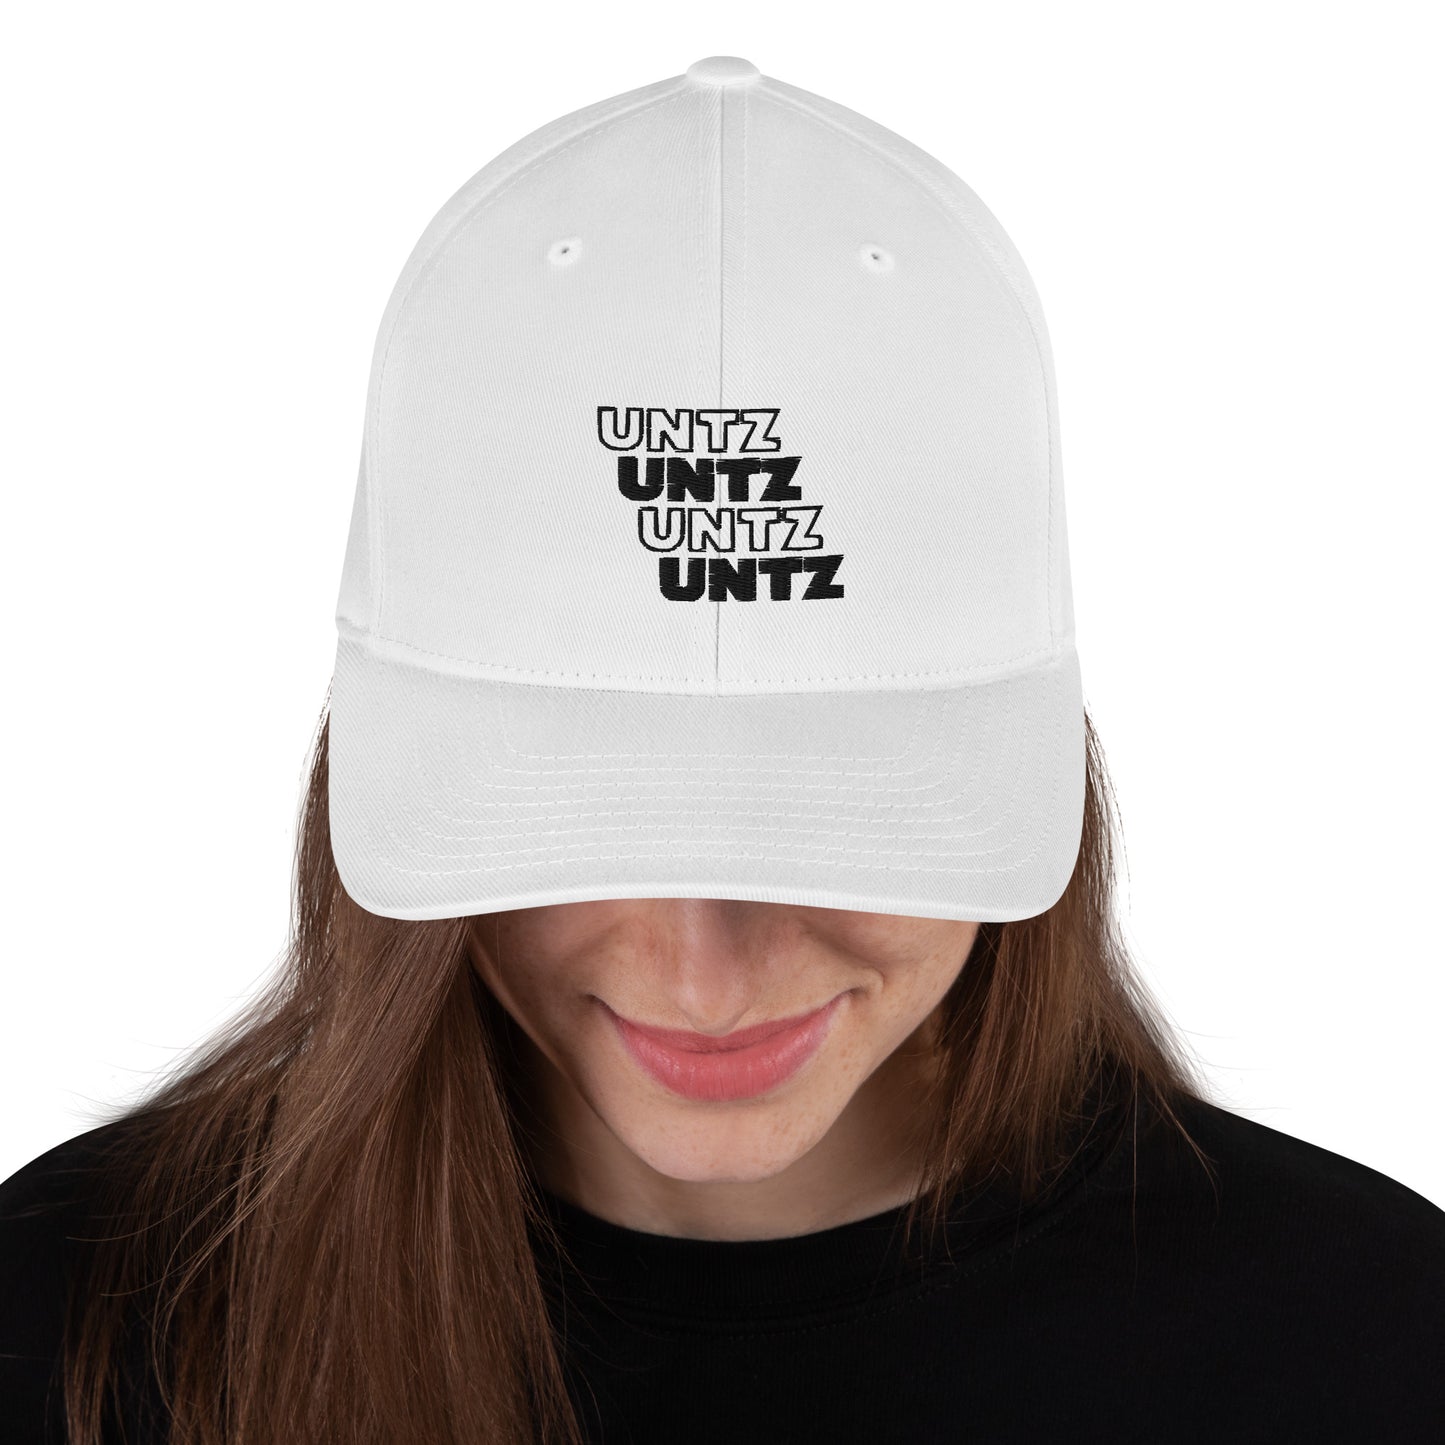 Untz Untz Untz - Fitted Hat